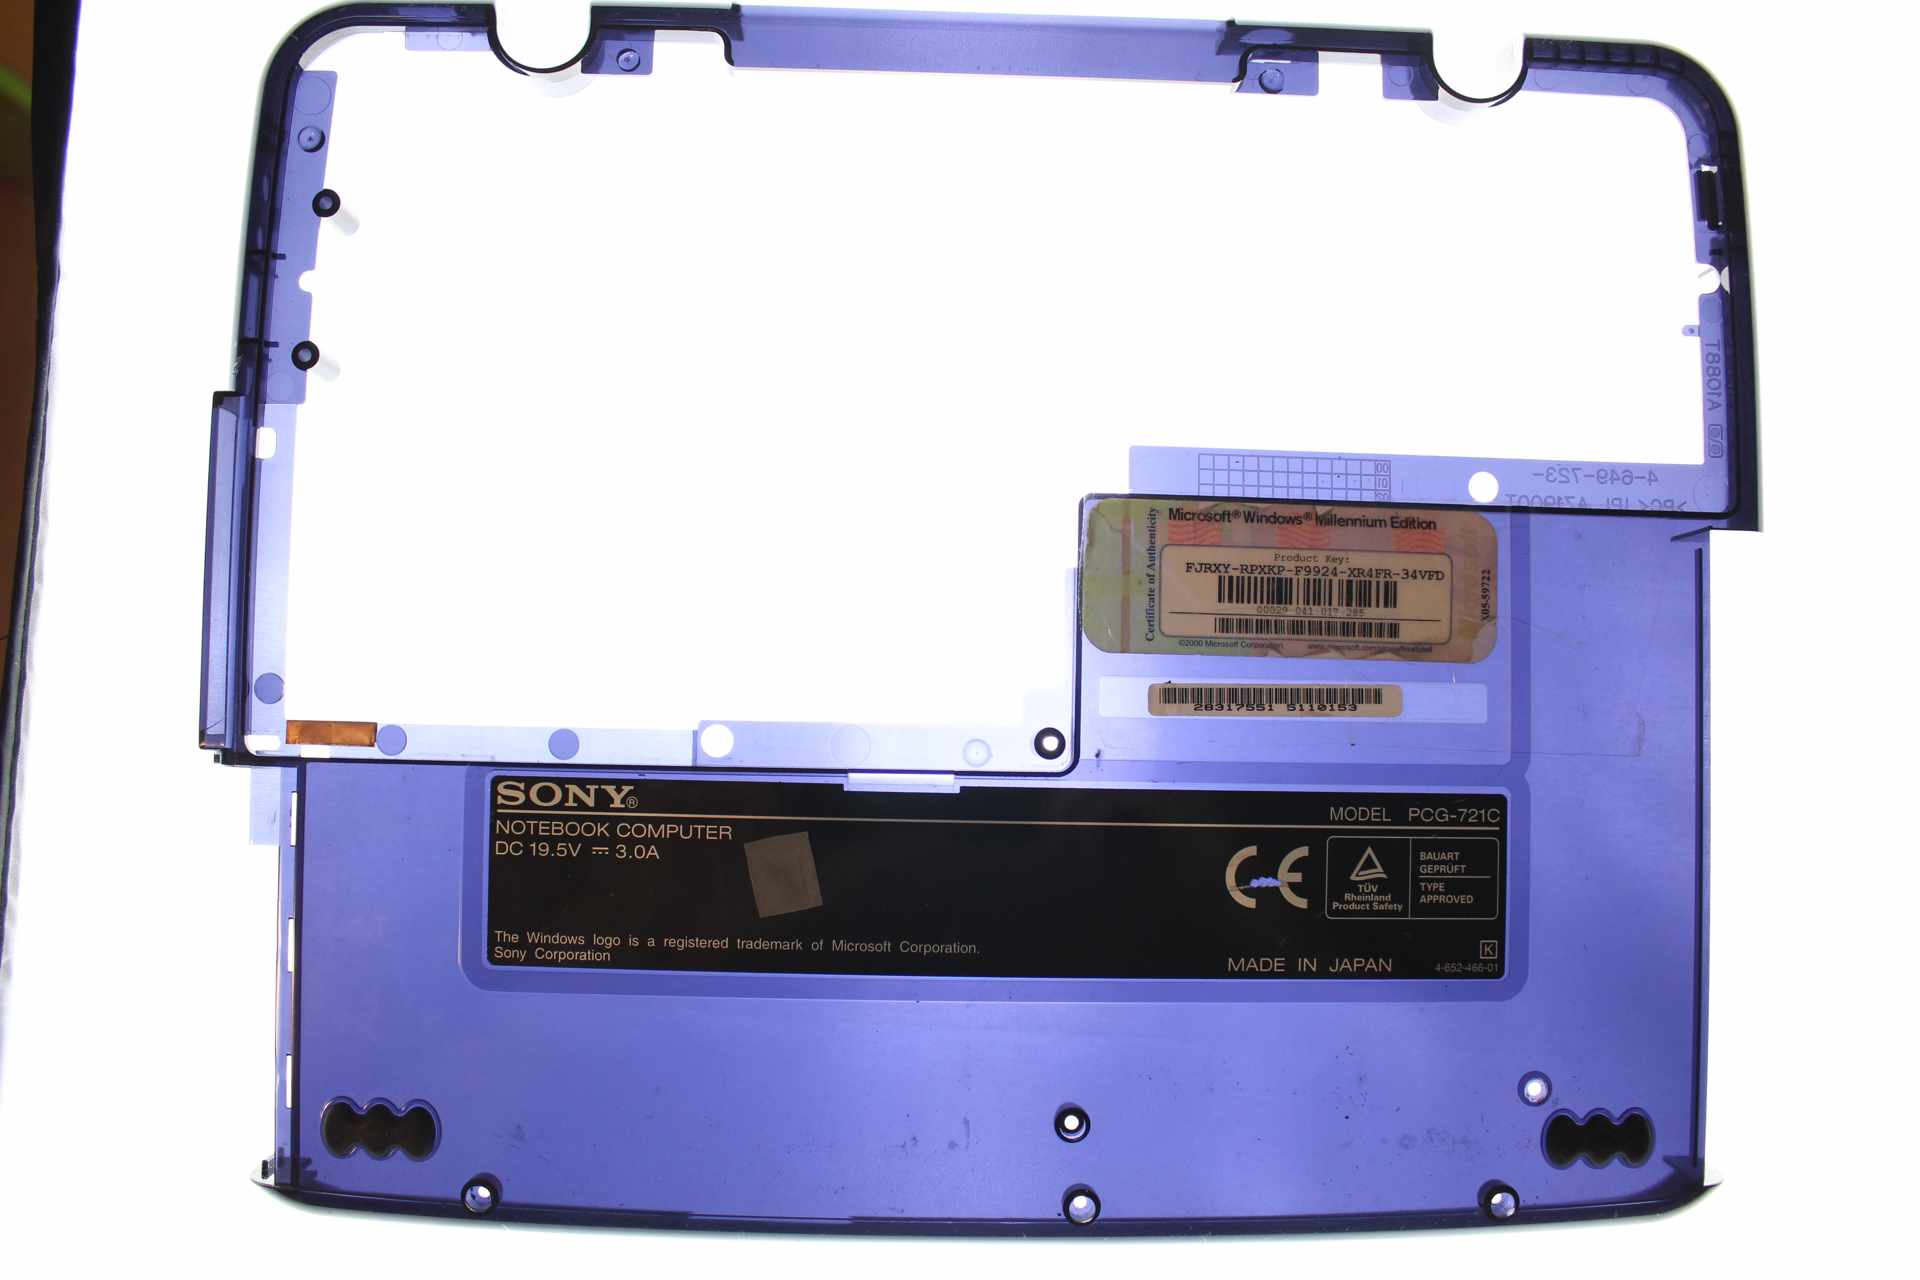 Sony Vaio PCG-QR10